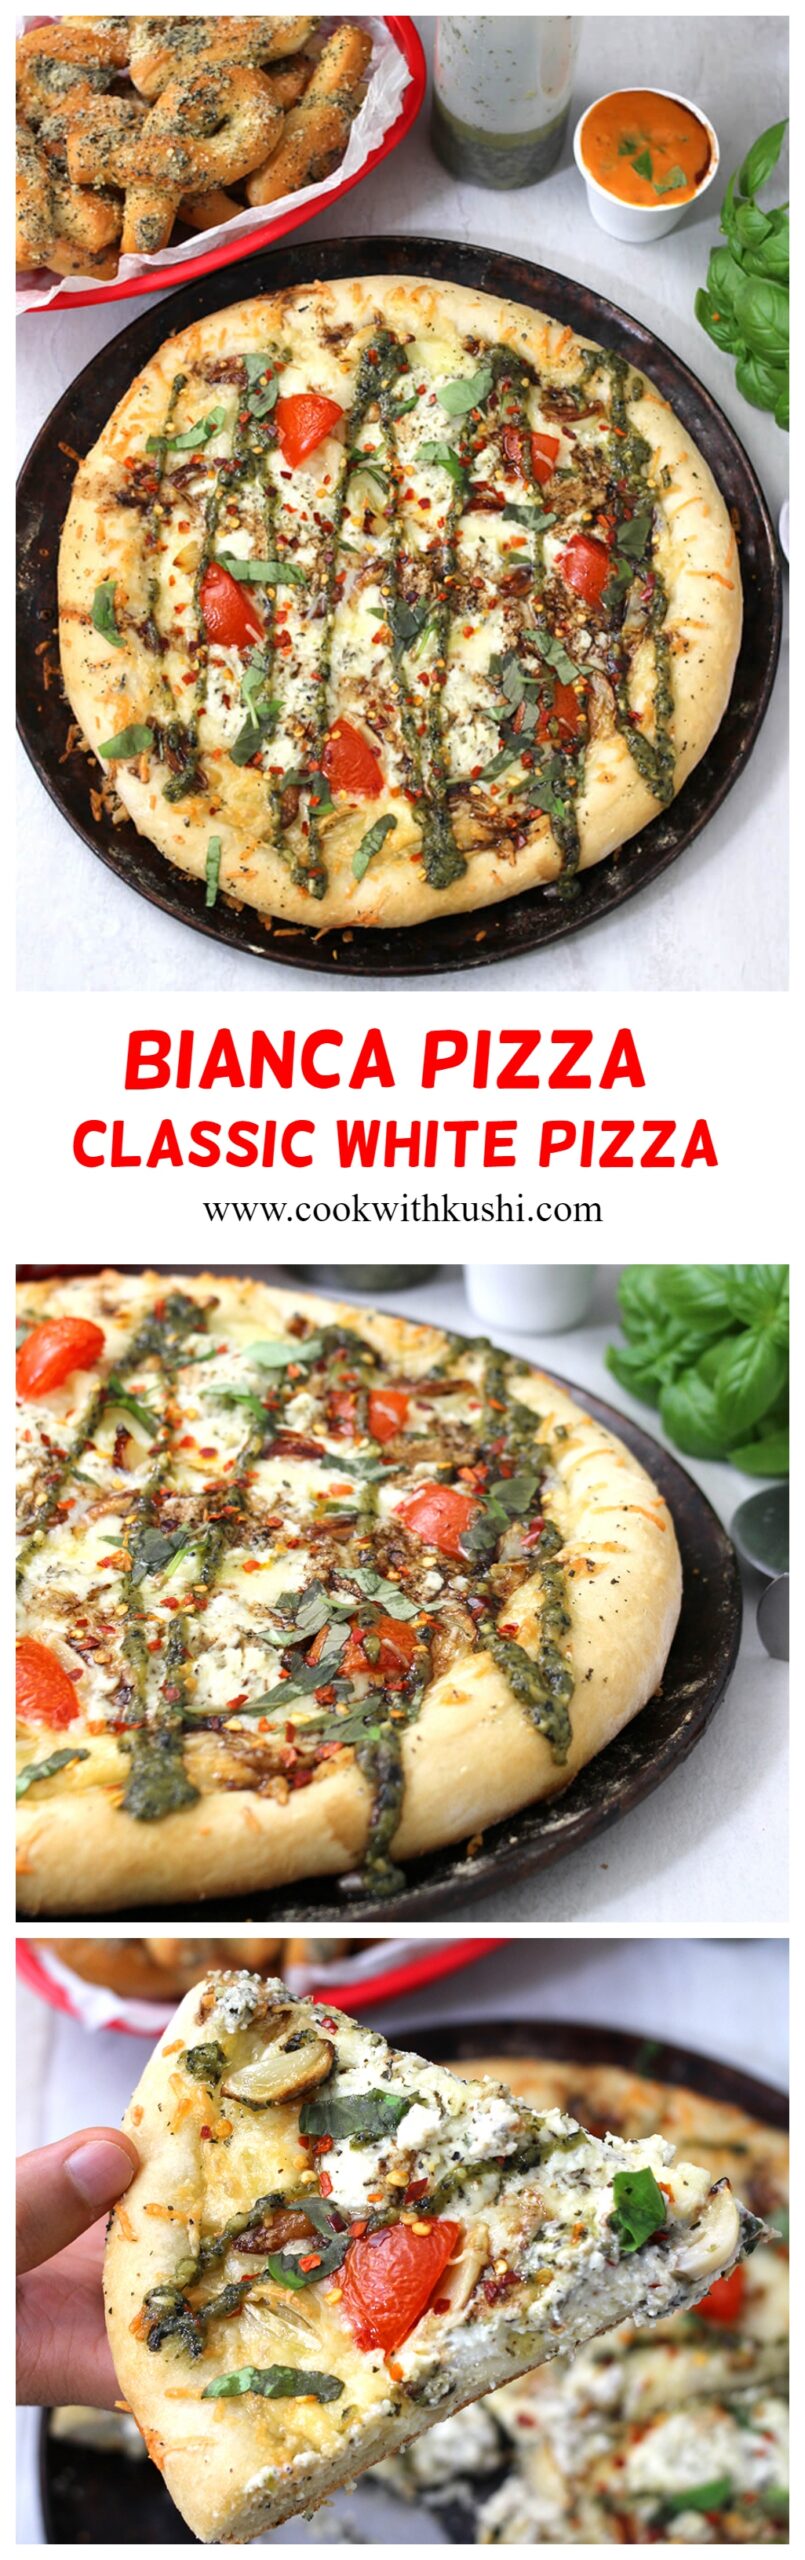 How to make classic white pizza, bianca pizza #homemade